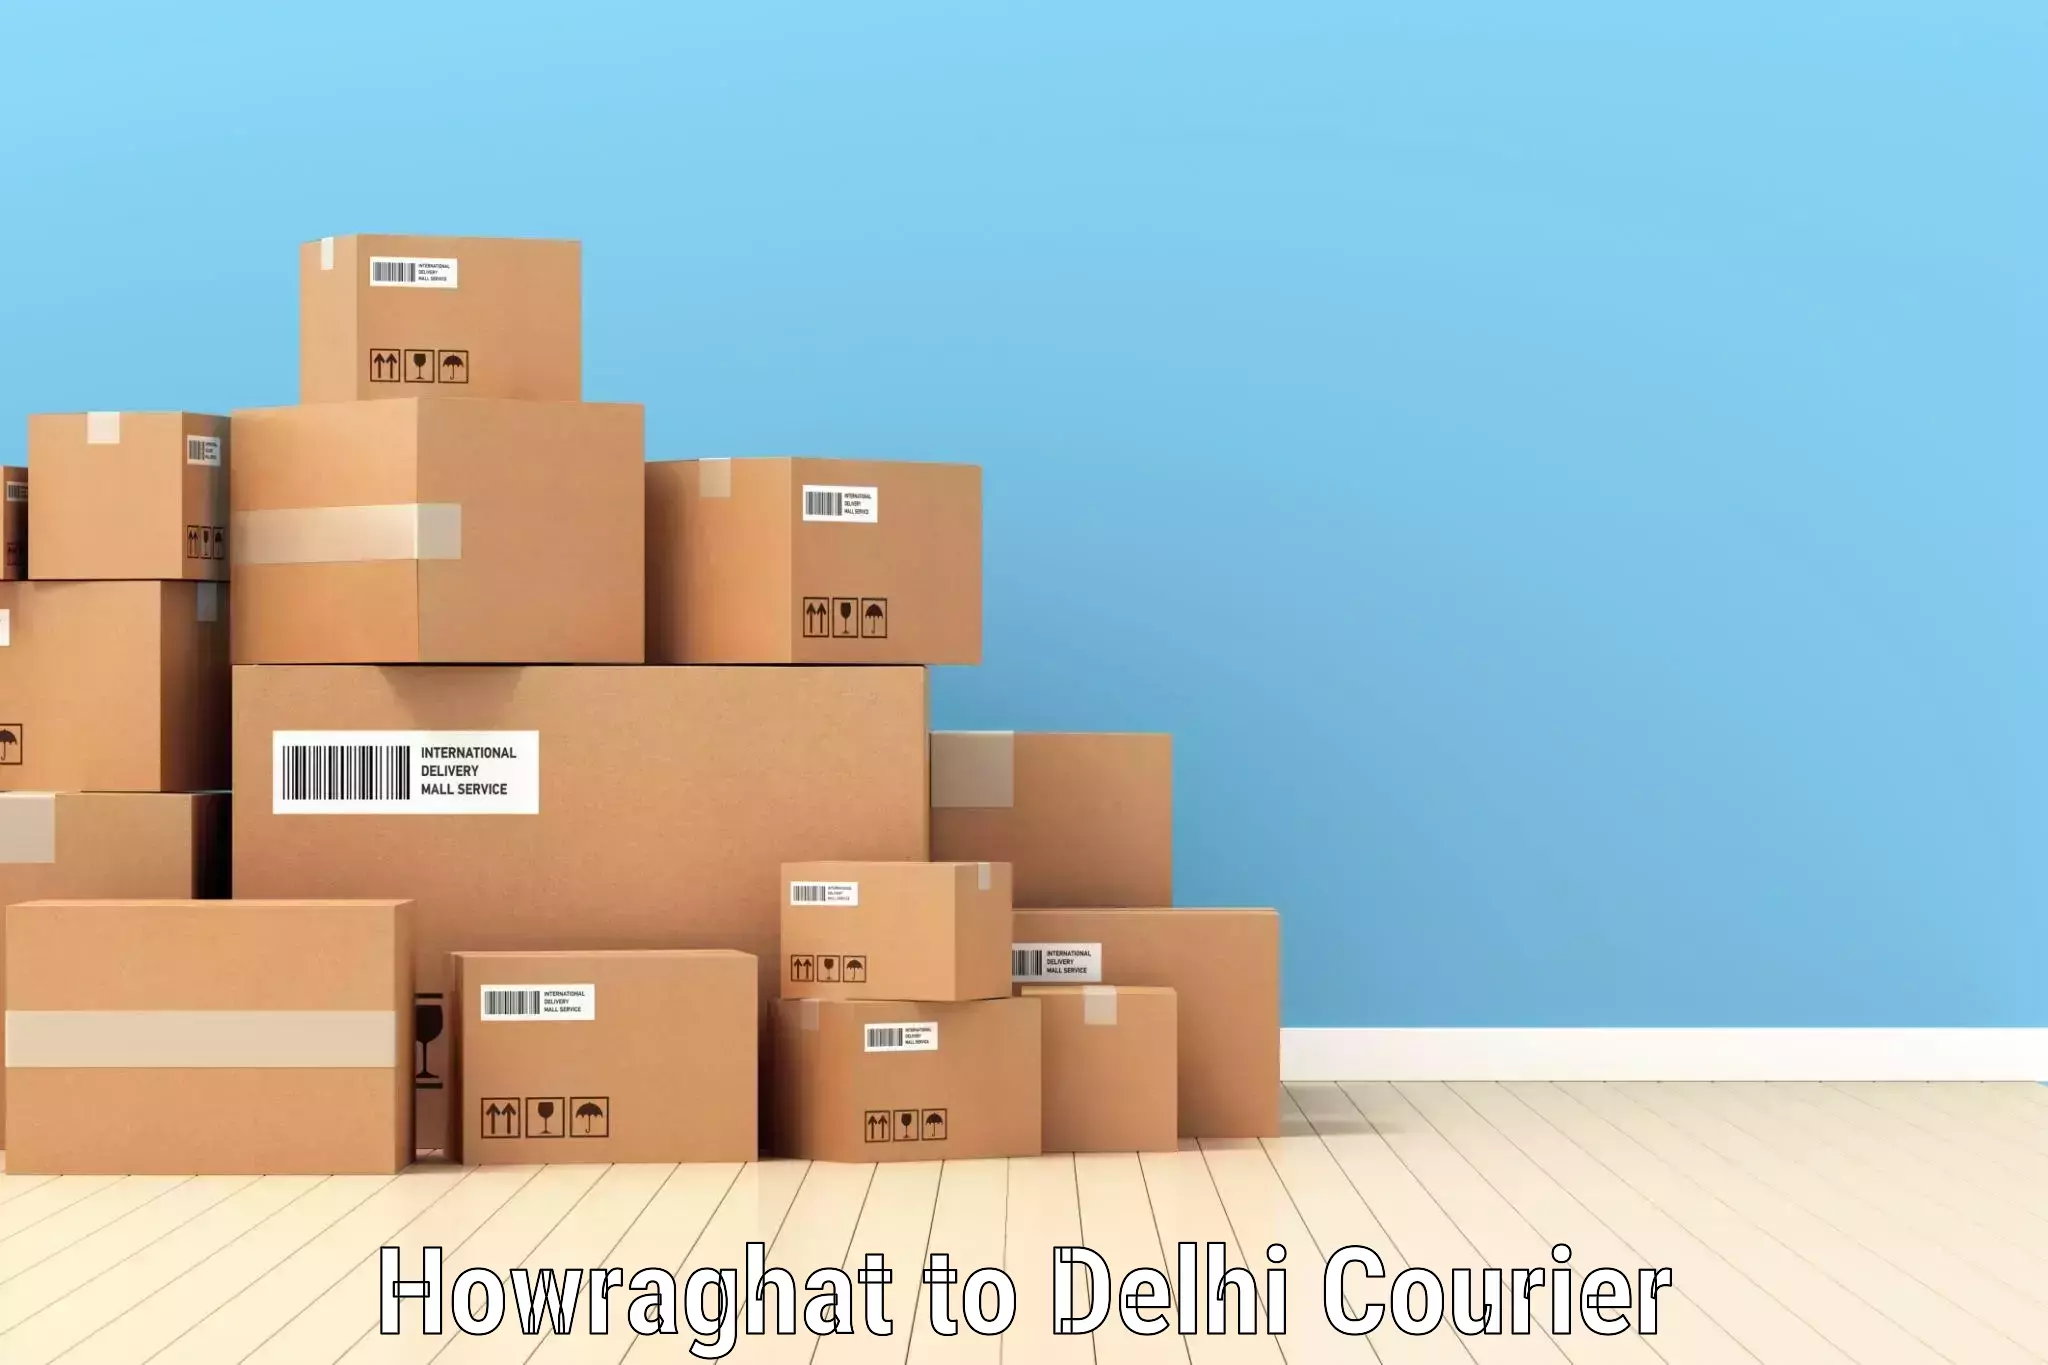 Multi-service courier options Howraghat to Jamia Millia Islamia New Delhi